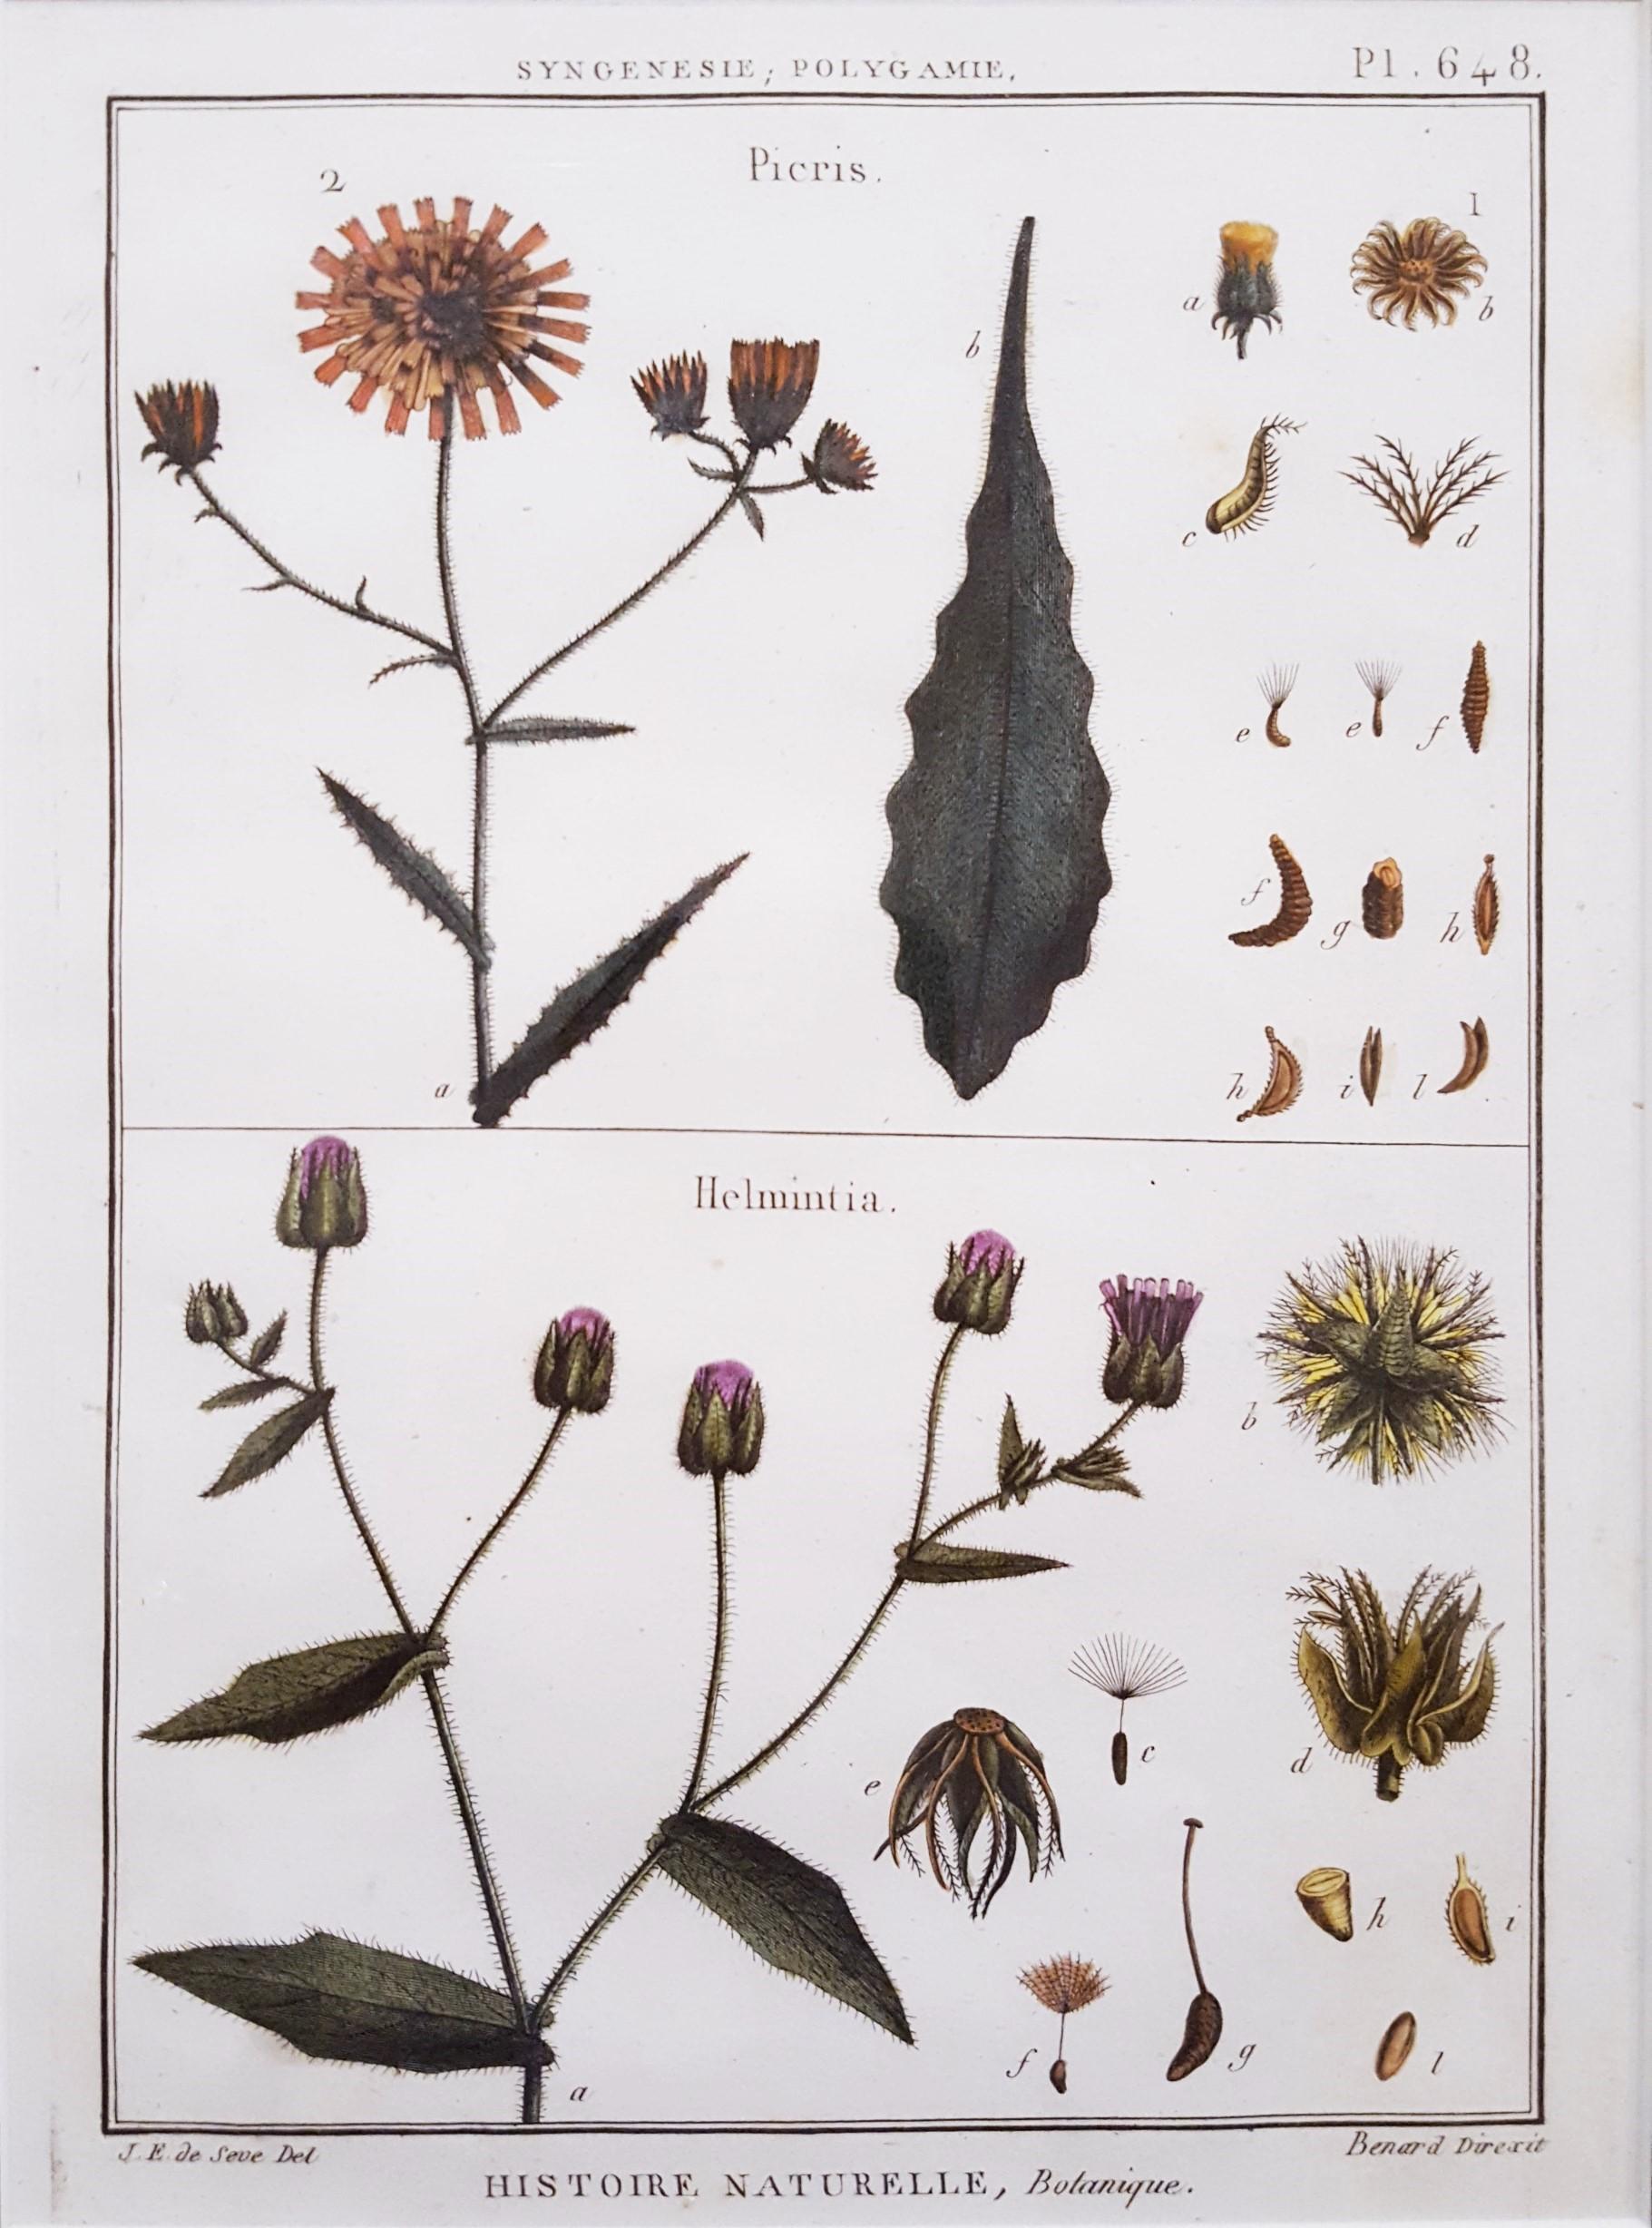 Picris (Sunflower); Helmintia (Bristly Oxtongue)